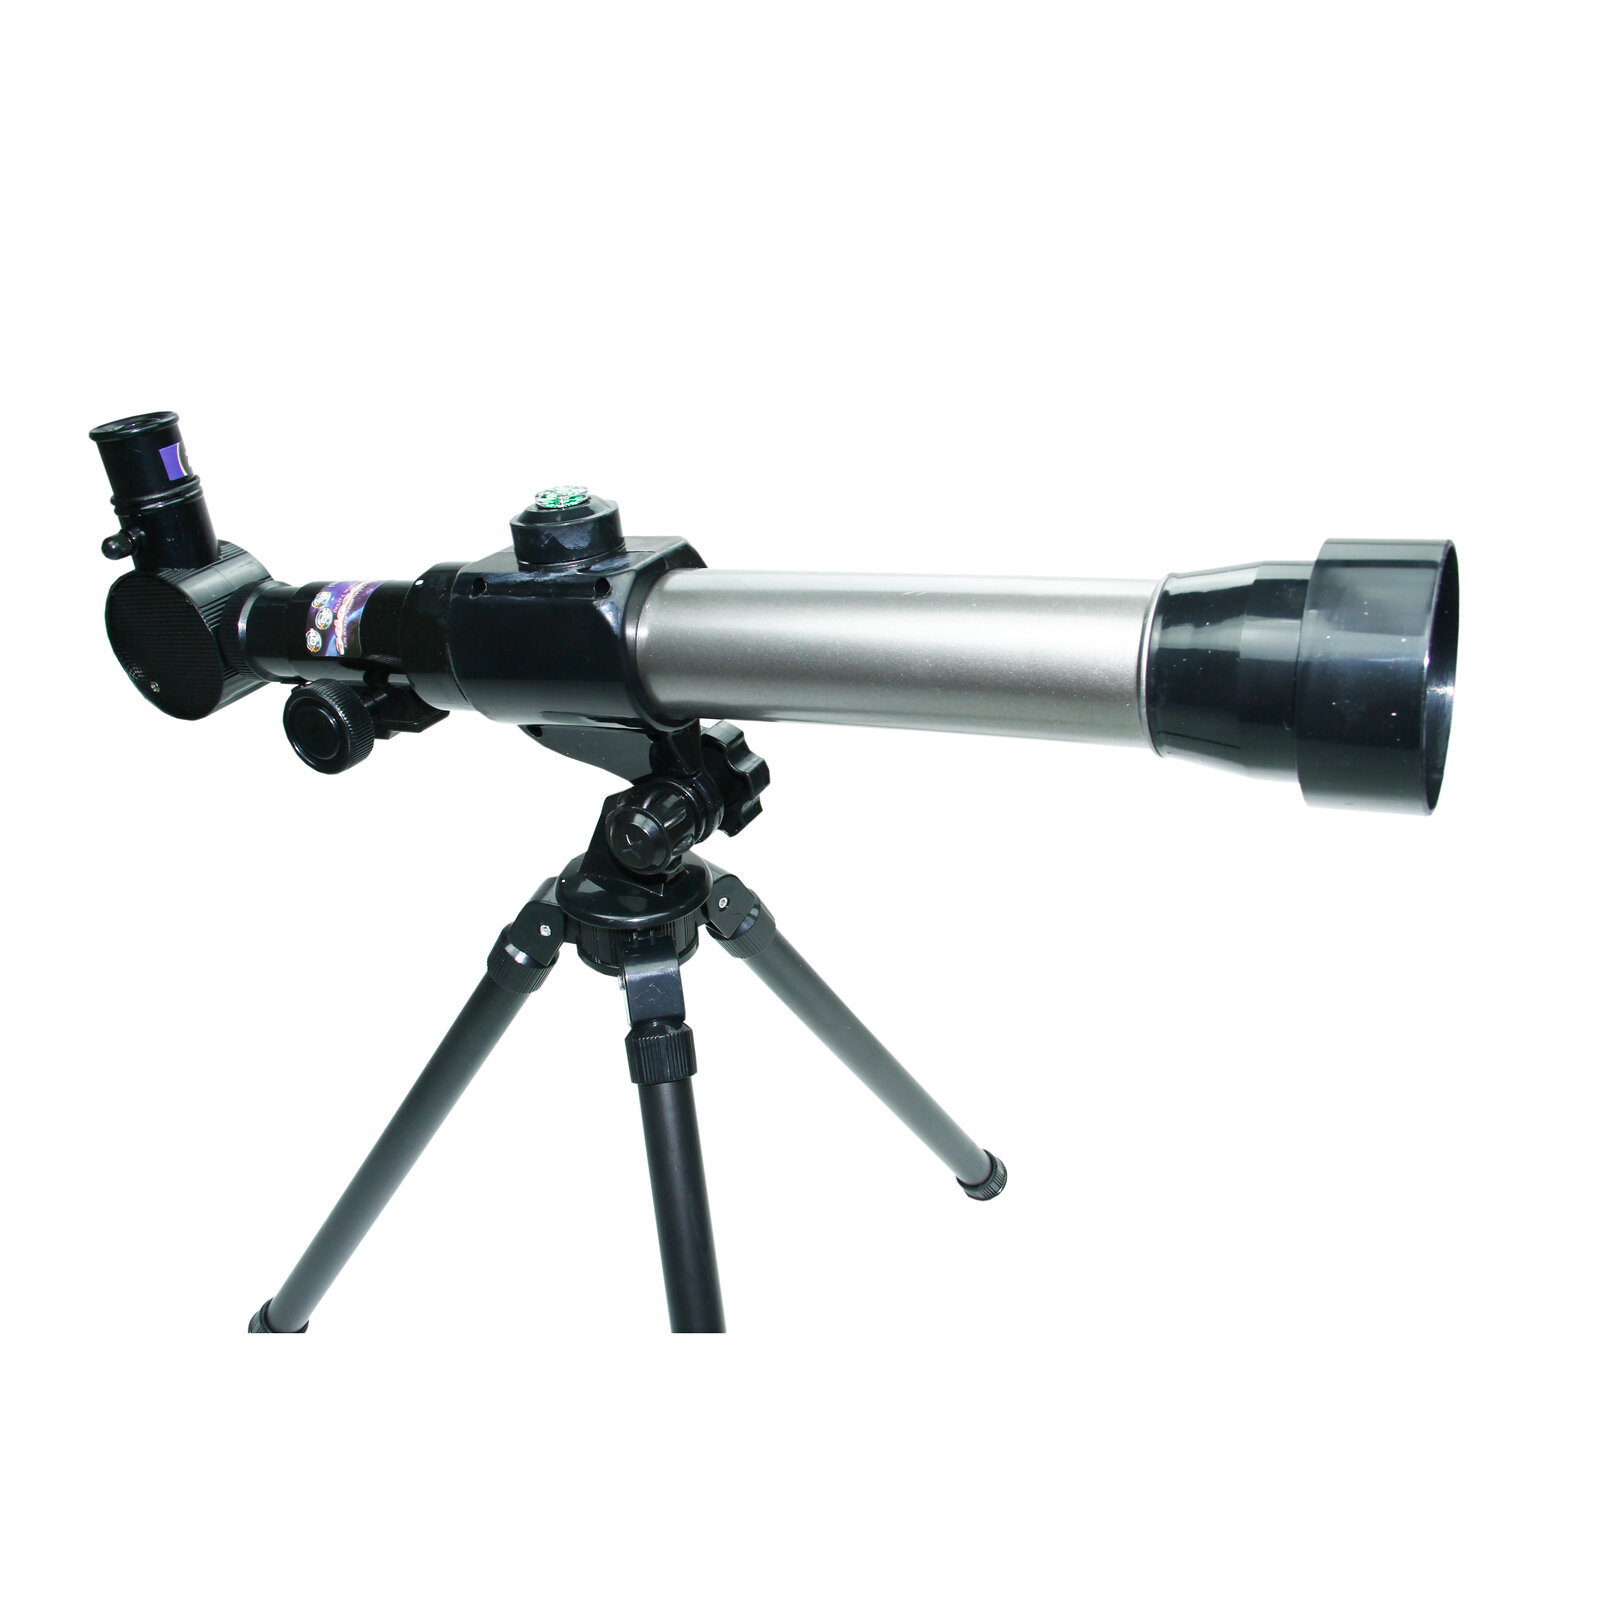 Experience Teleskop